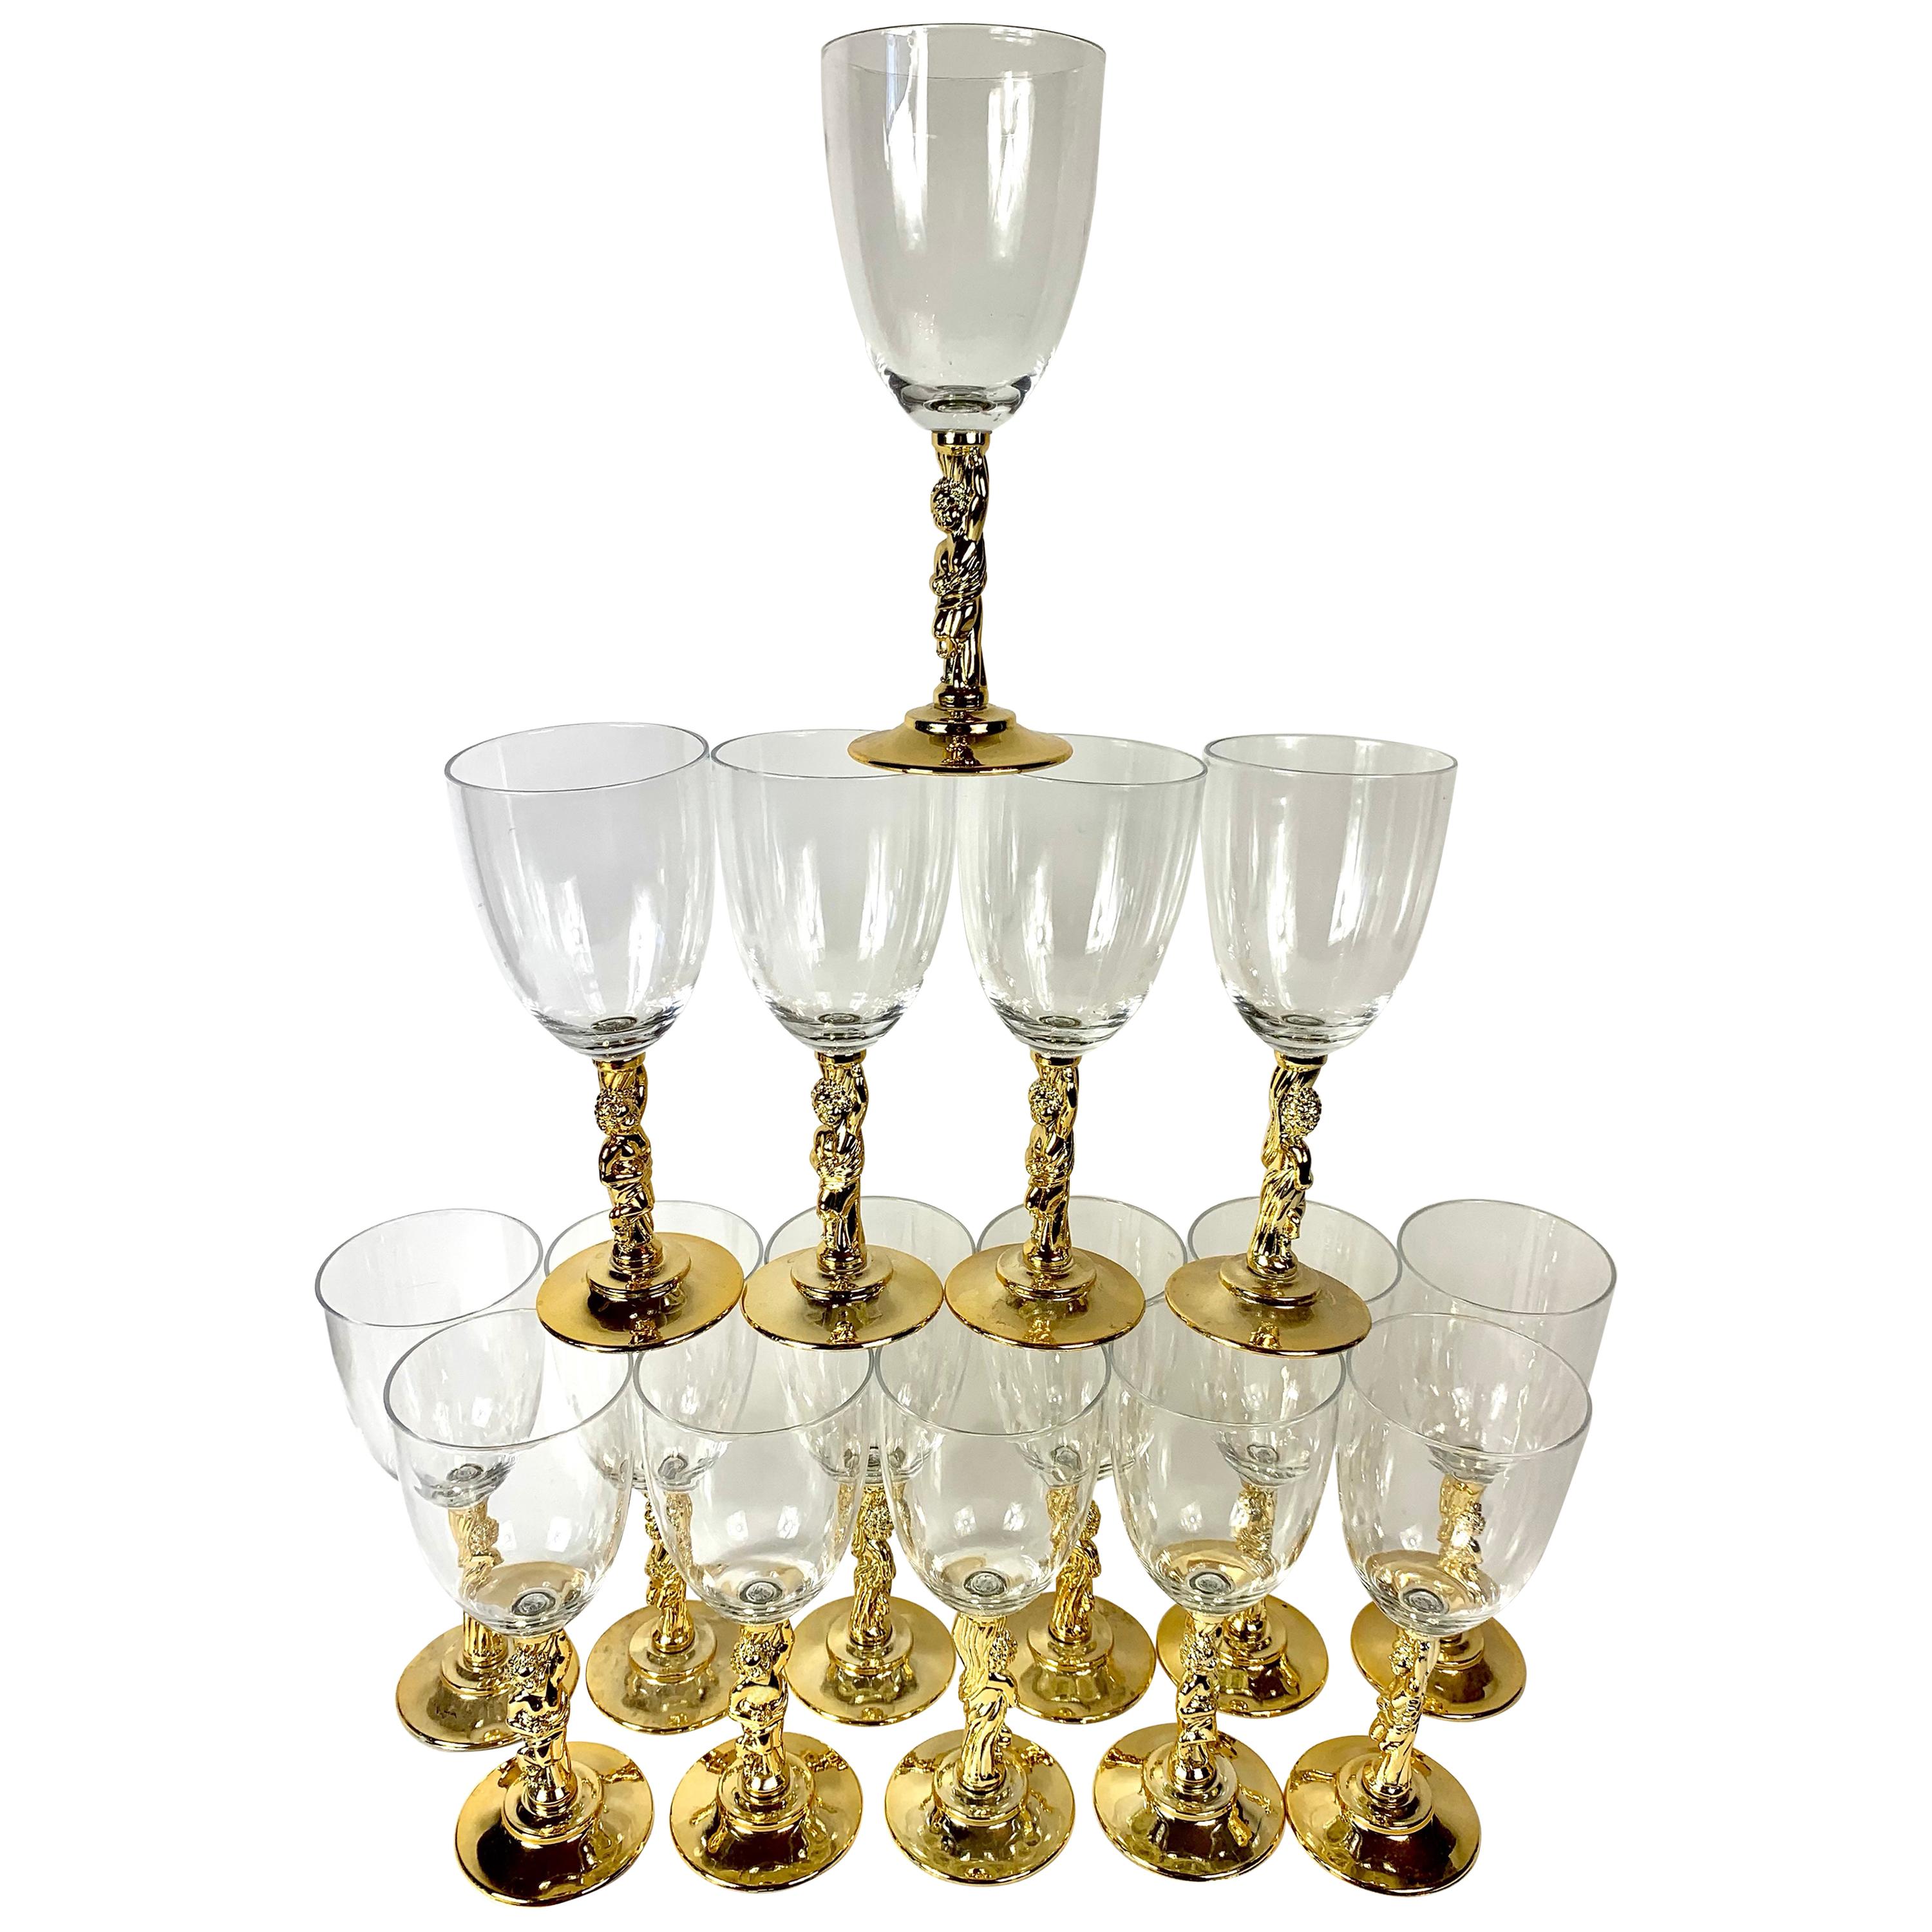 Greek Bacchus Gold Wine Glasses or Water Goblets